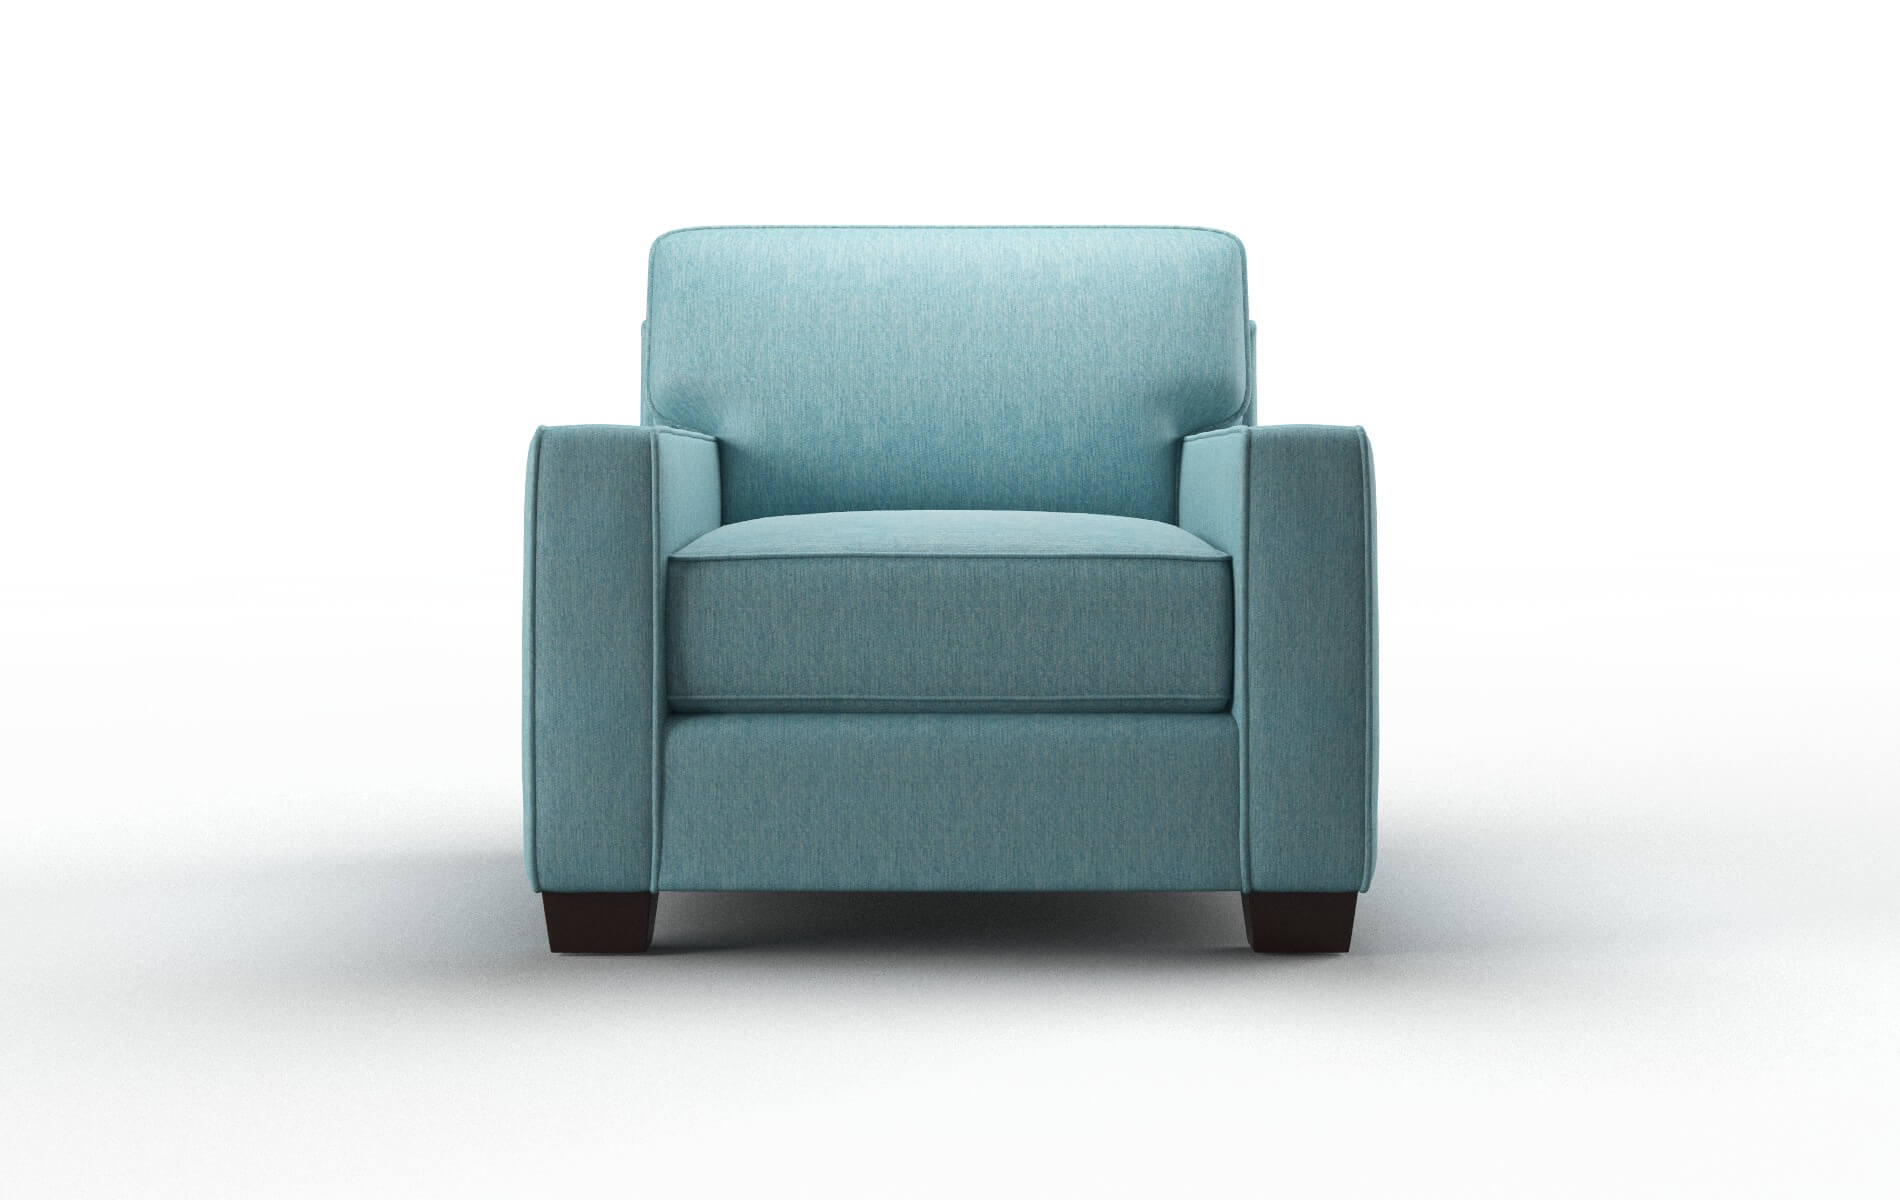 Chicago Cosmo Turquoise chair espresso legs